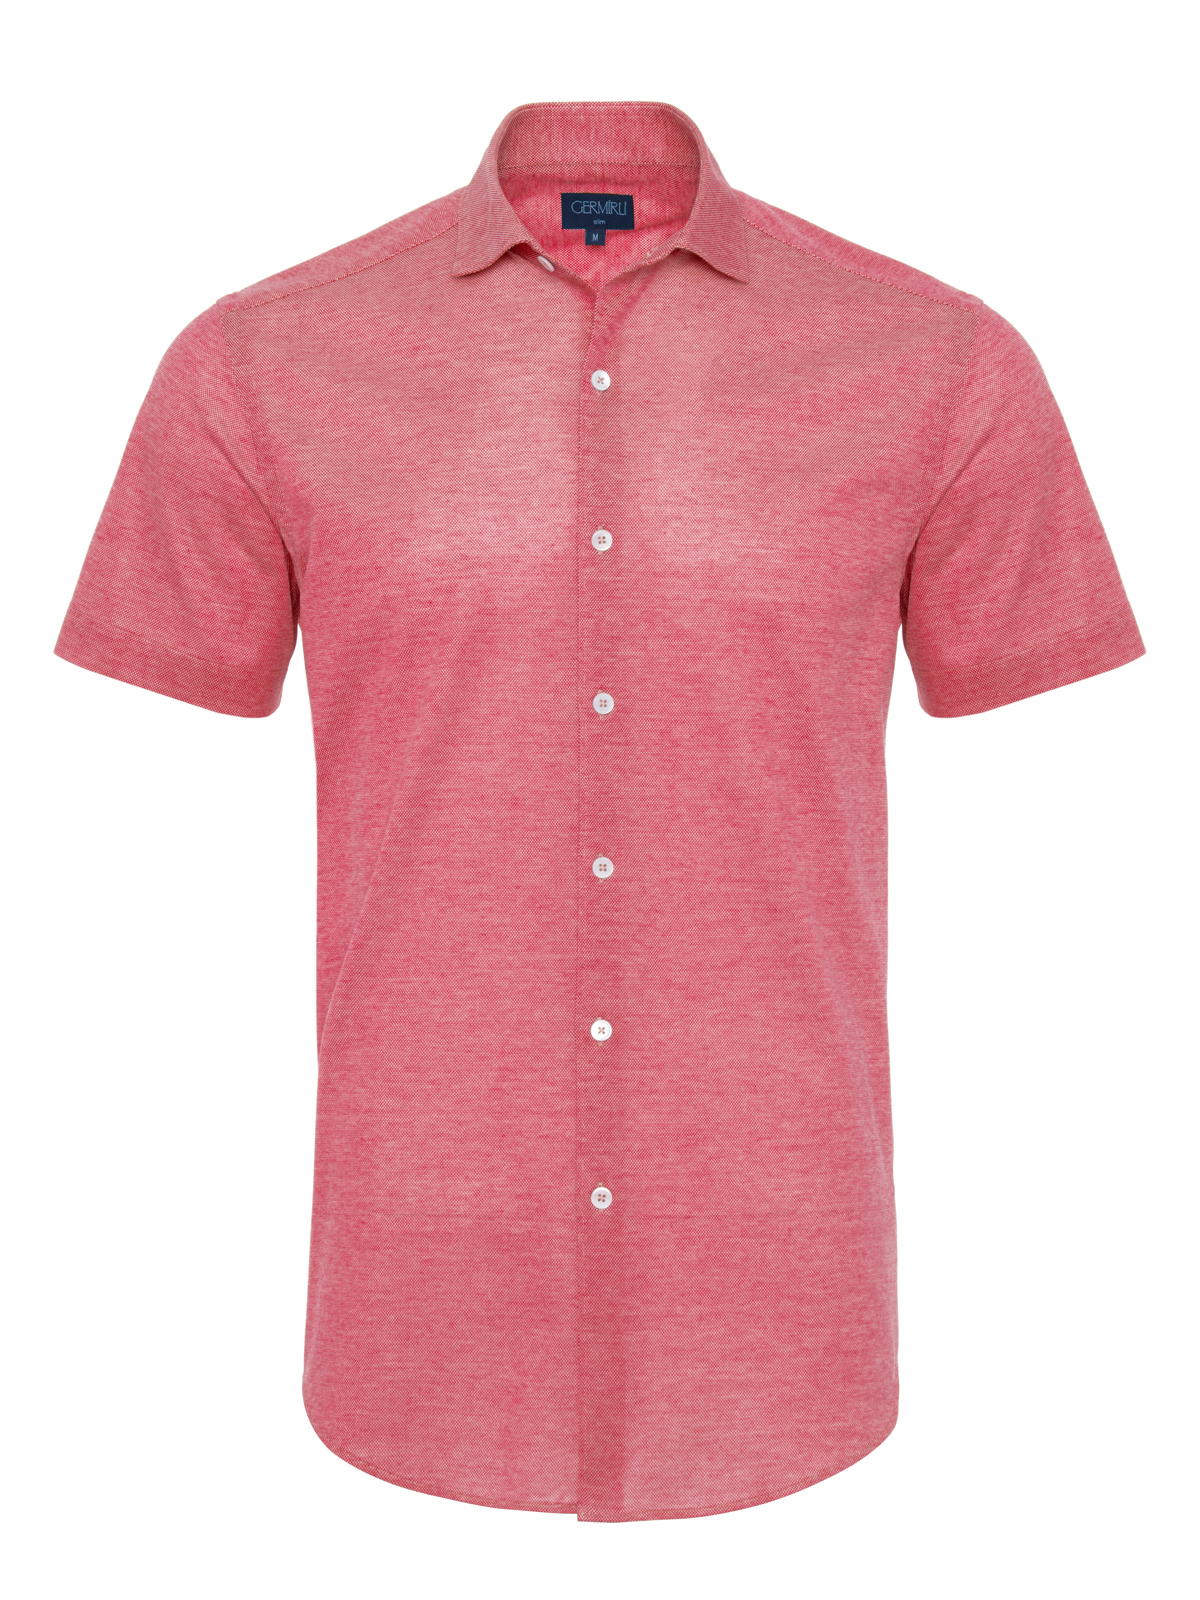 Germirli - Germirli Coral Red Soft Collar Jersey Short Sleeve Slim Fit Shirt